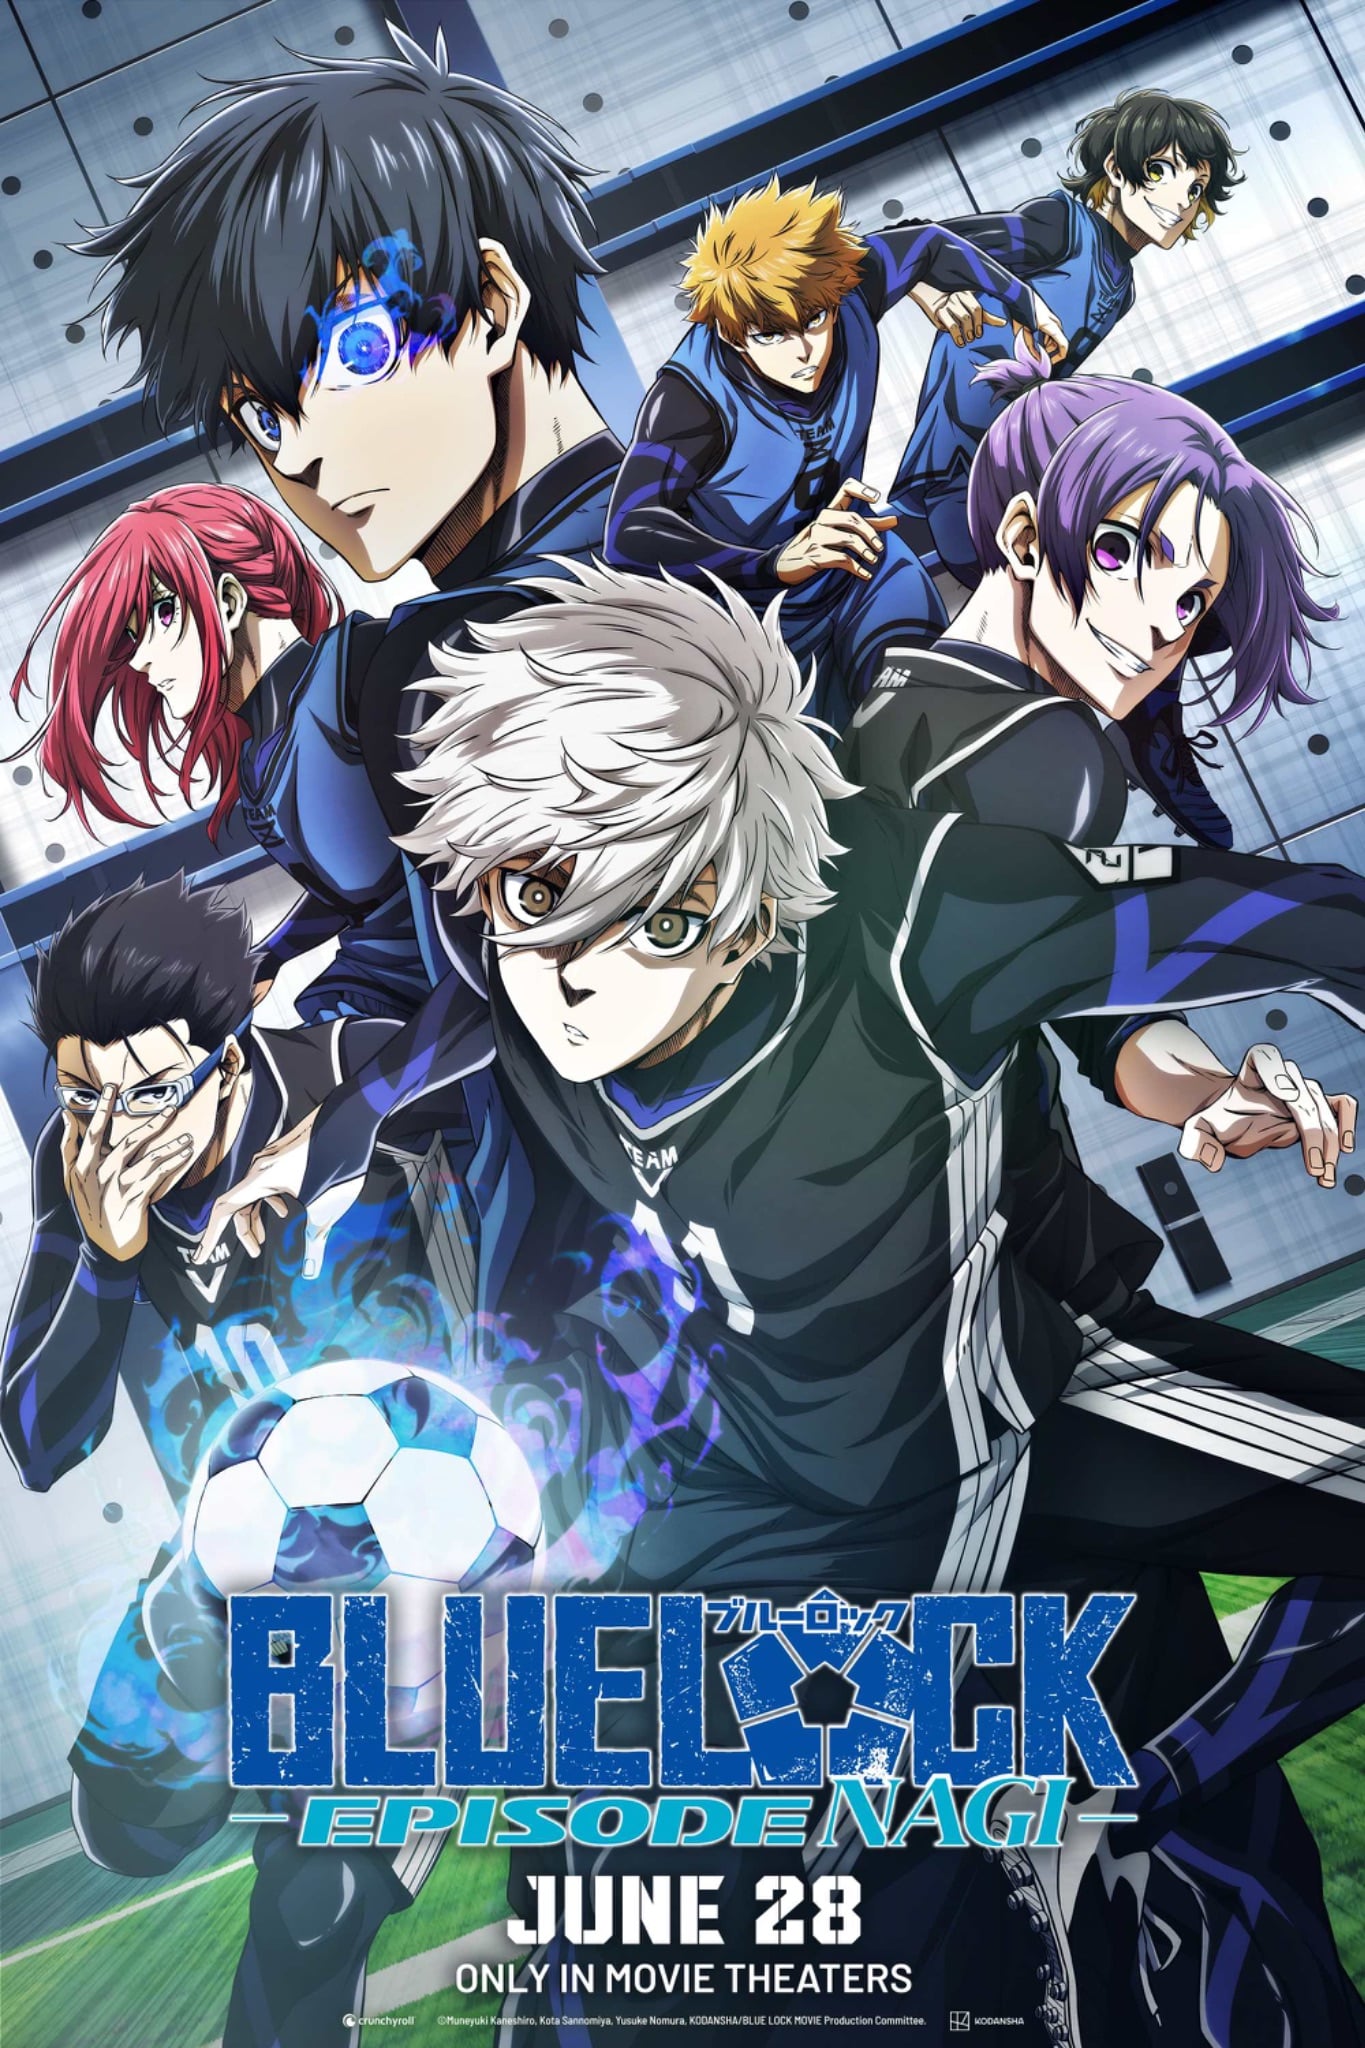 Poster for Blue Lock the Movie - Episode Nagi -